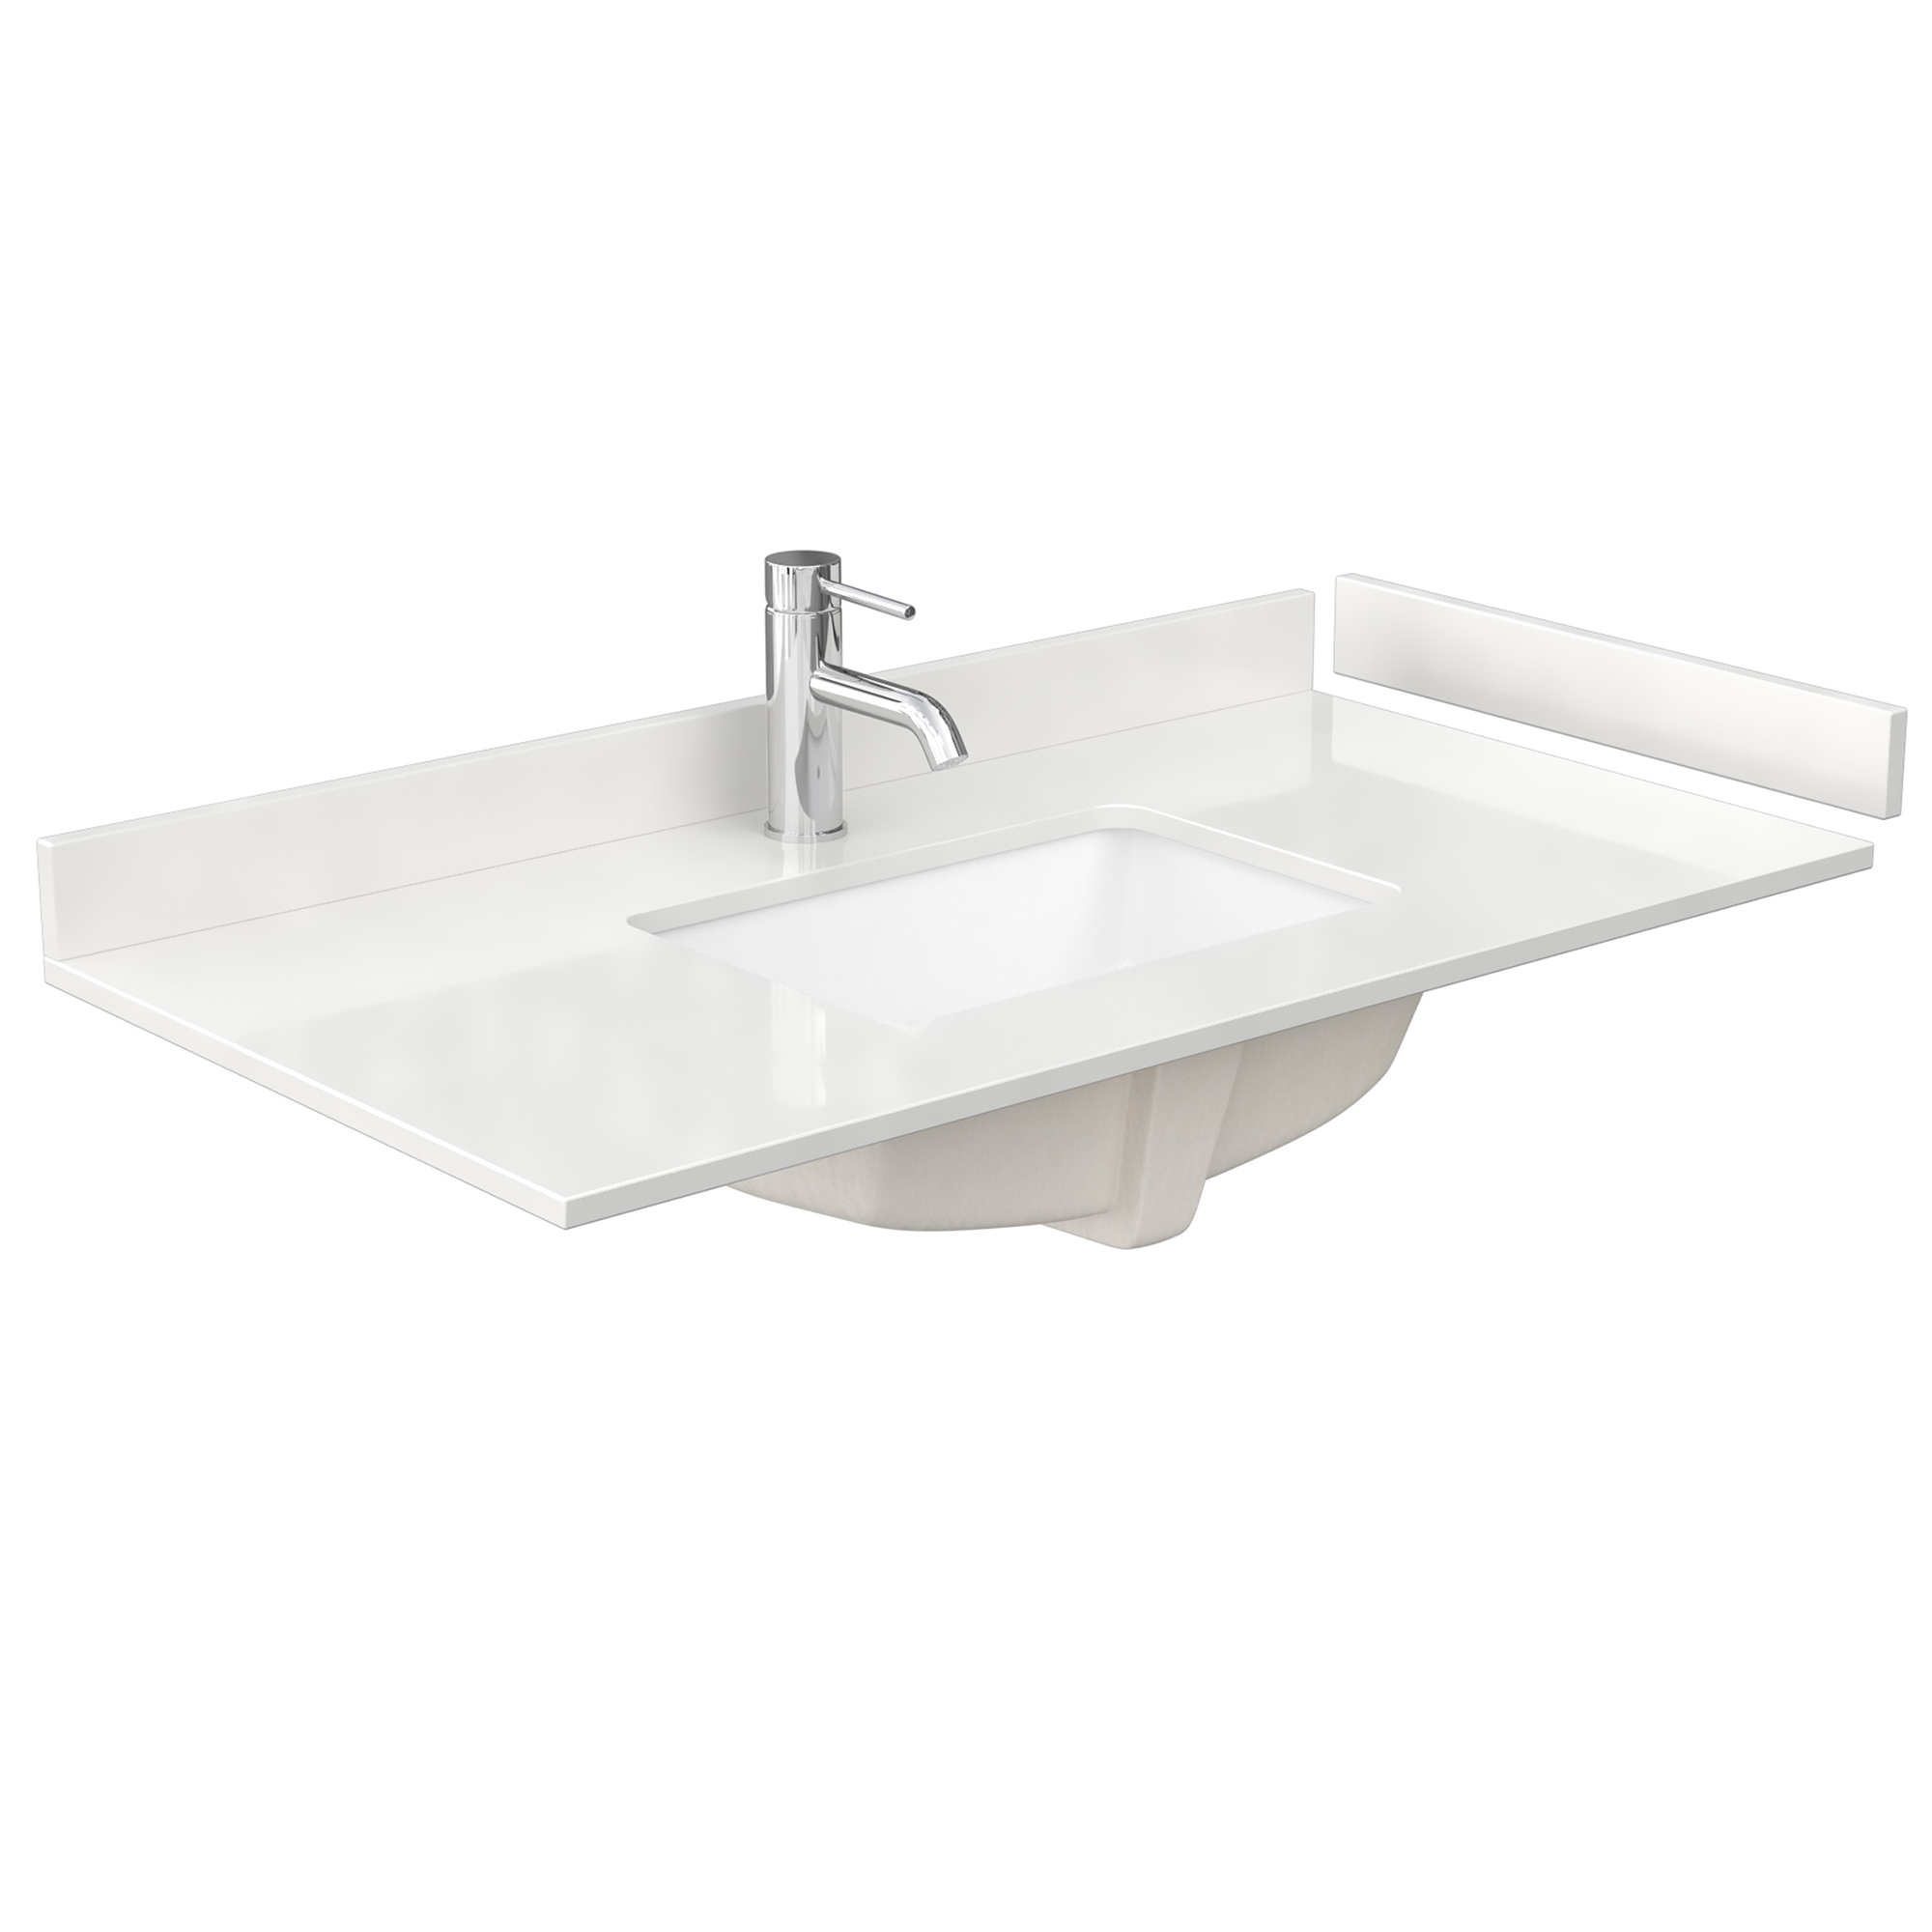 42" Single Countertop - White Quartz (1000) with Undermount Square Sink (1-Hole) - Includes Backsplash and Sidesplash WCFQC142STOPUNSWQ